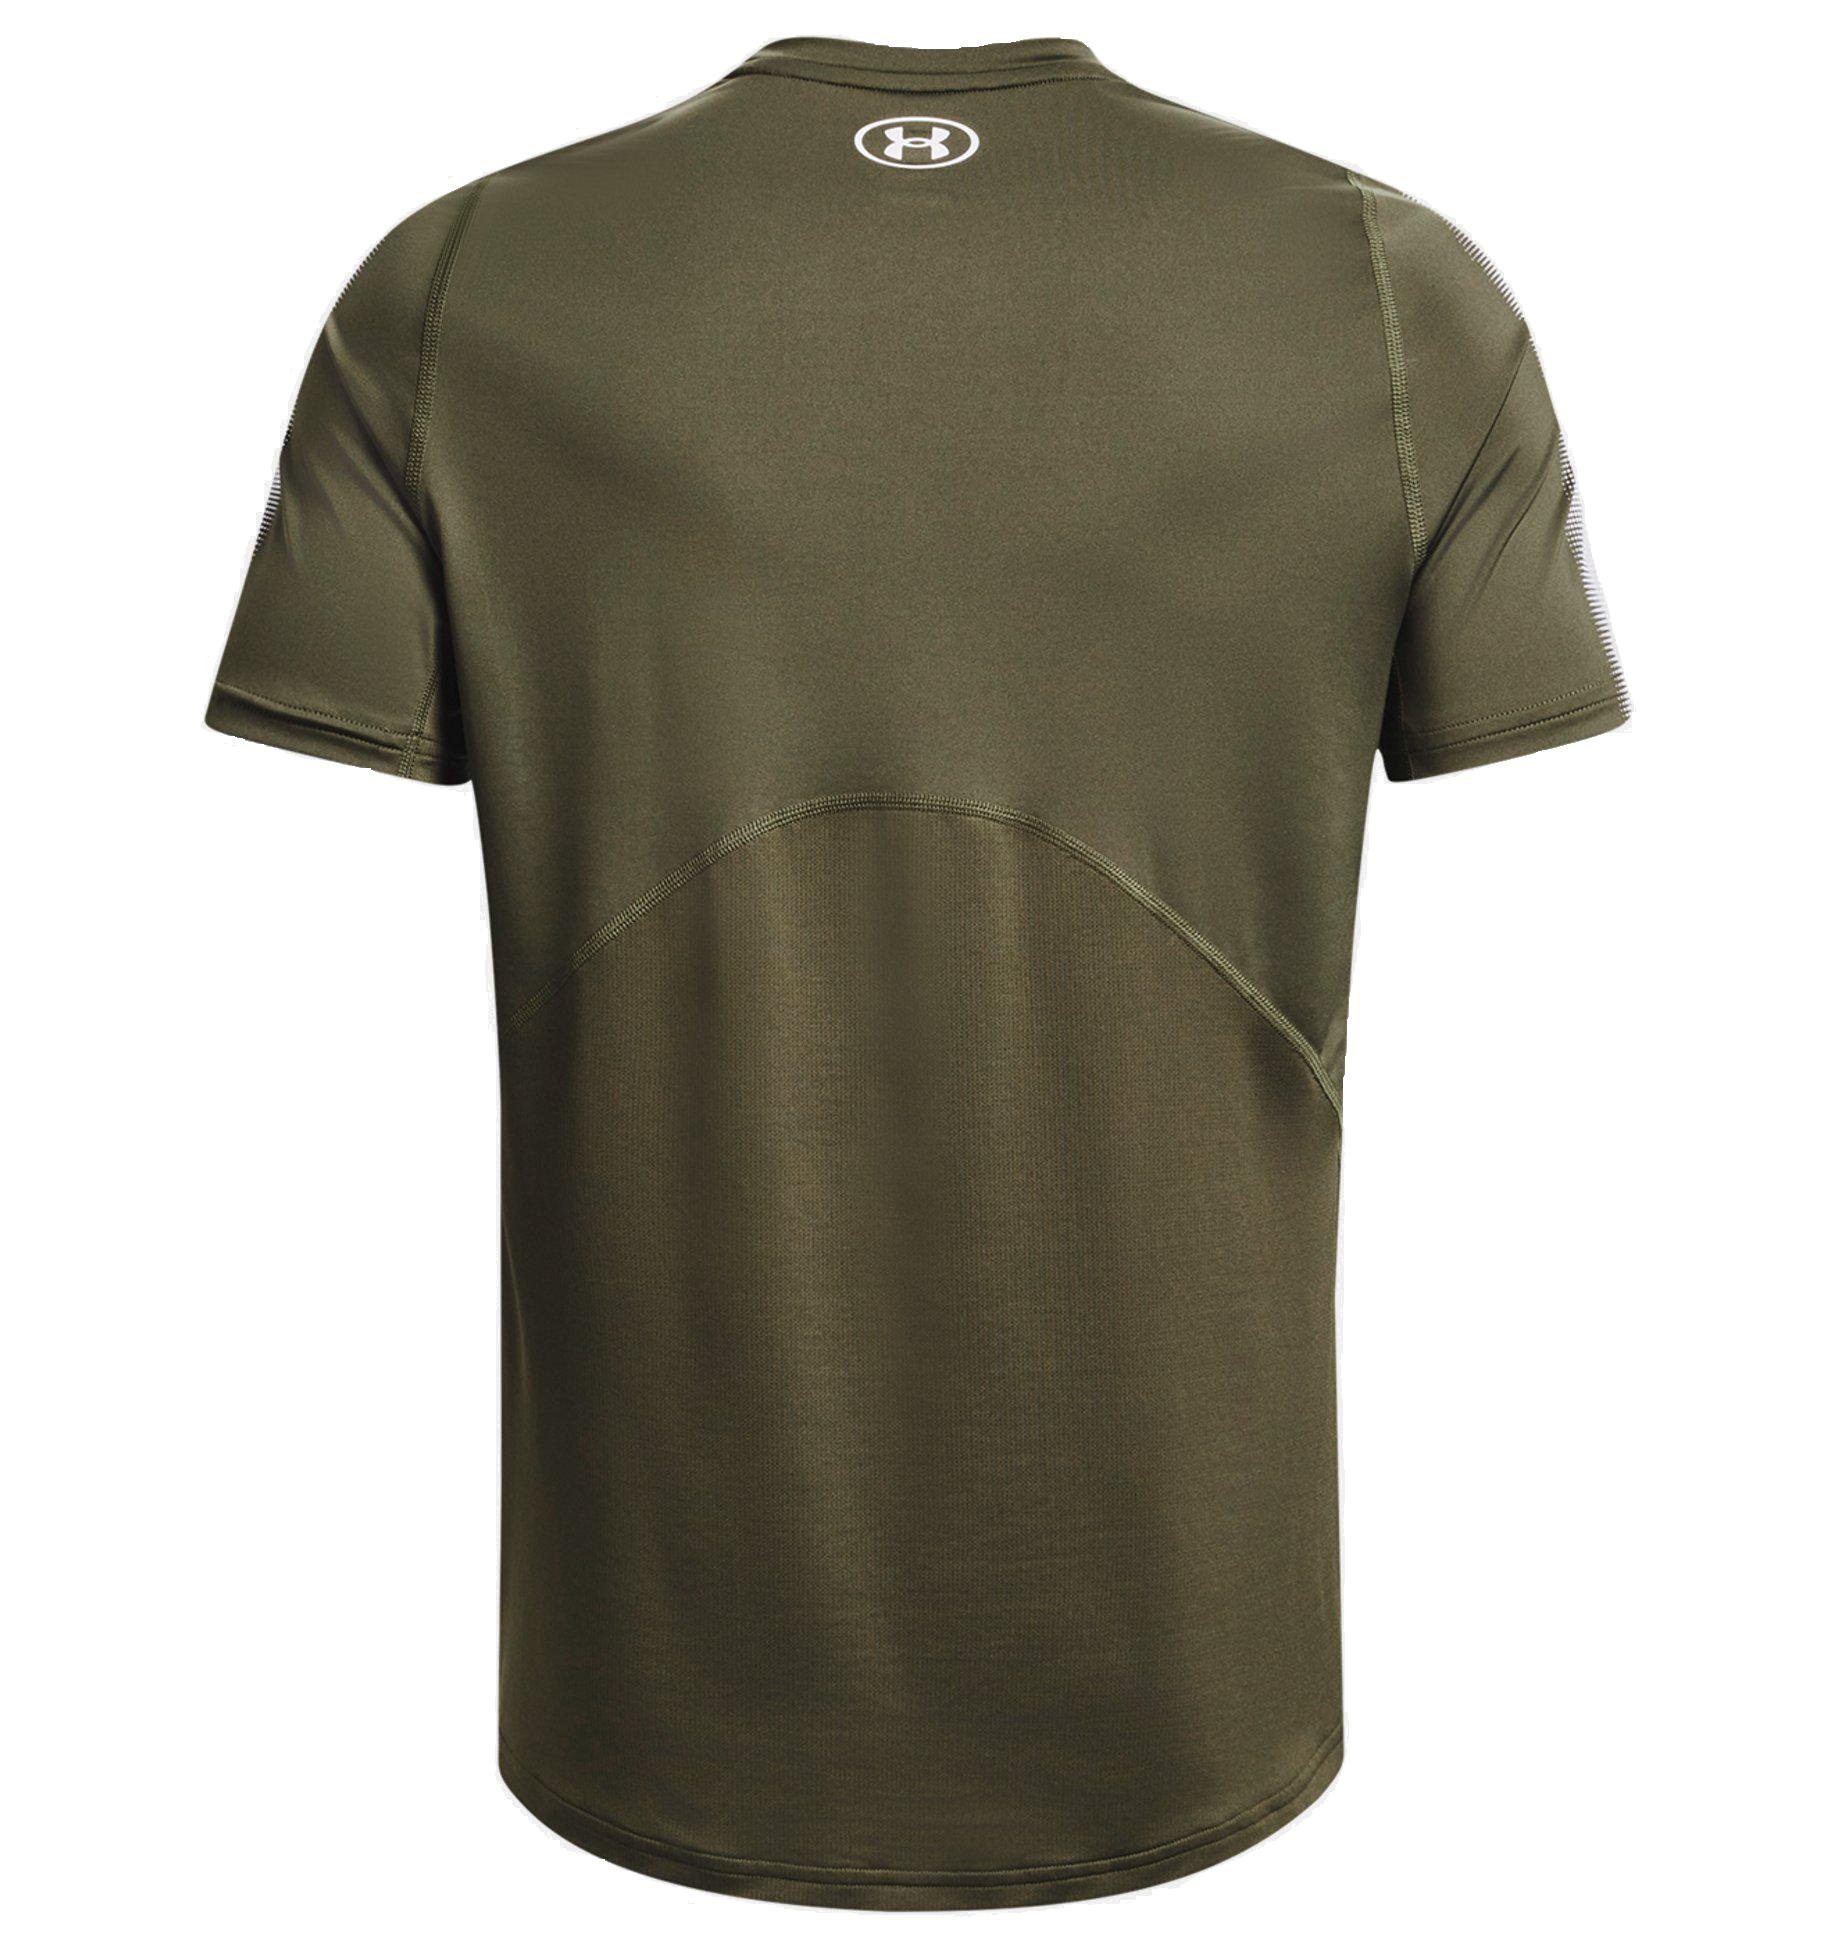 Khaki UA T-Shirt Armour® Herren T-Shirt Under HeatGear